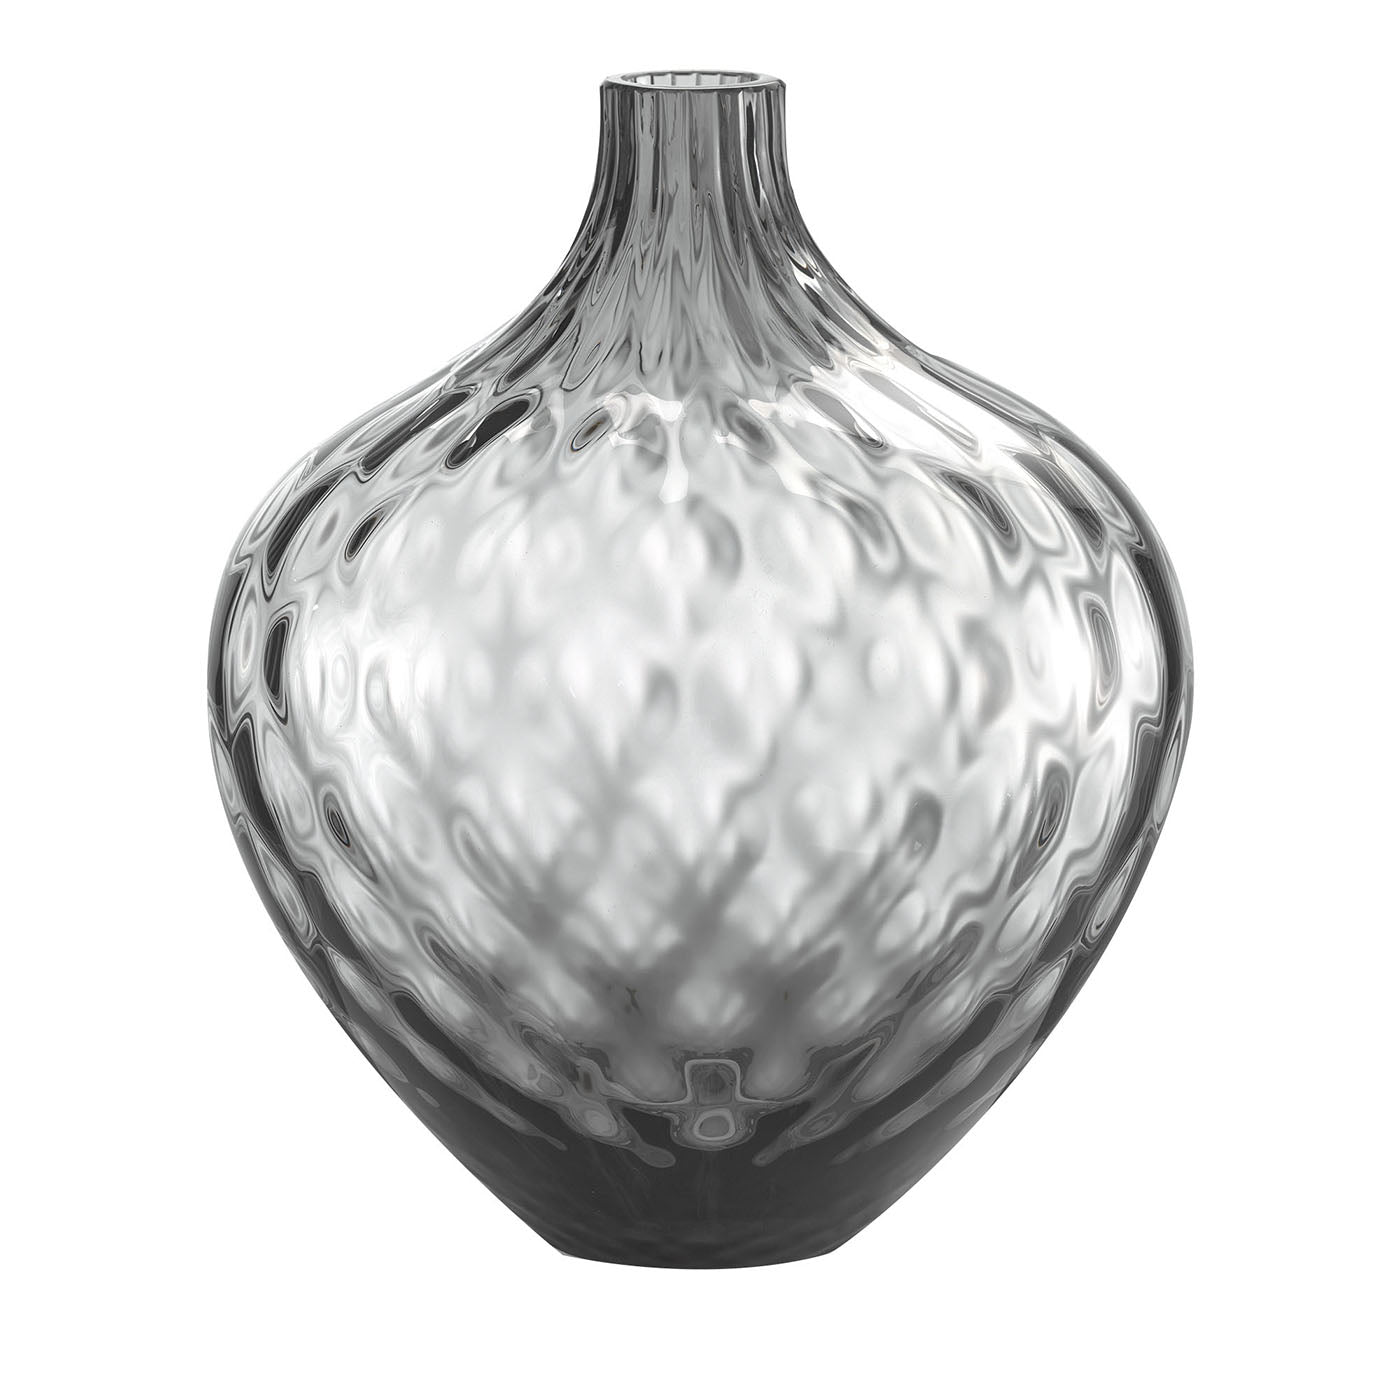 Samarcanda Medium Balloton Gray Dekorative Vase - Hauptansicht